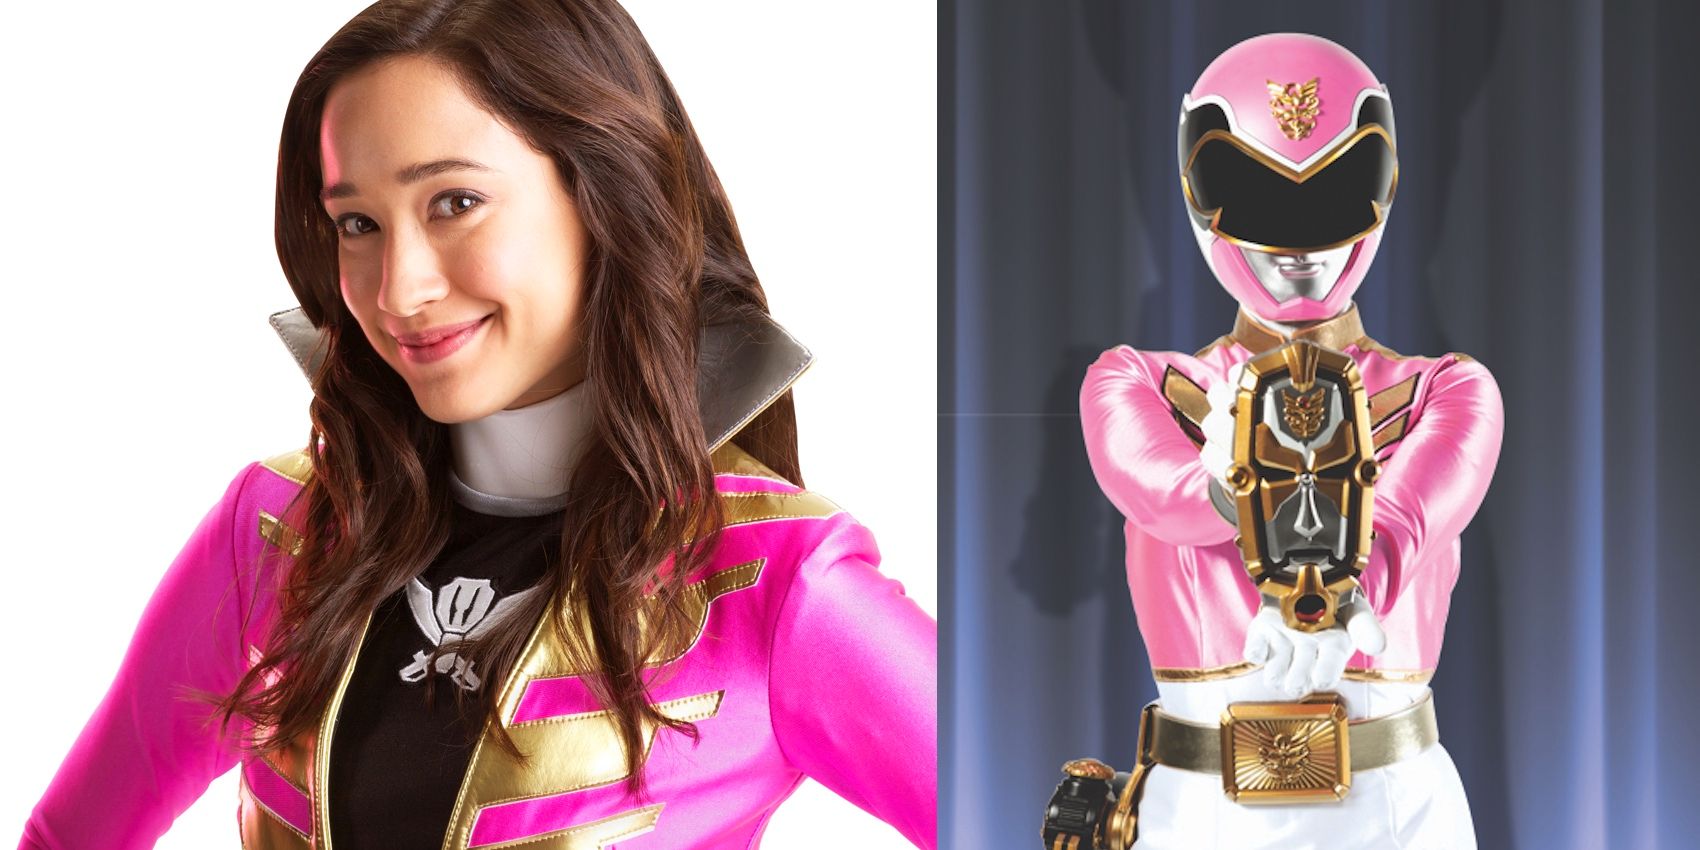 Emma Goodall is the Power Rangers Megaforce Pink Ranger